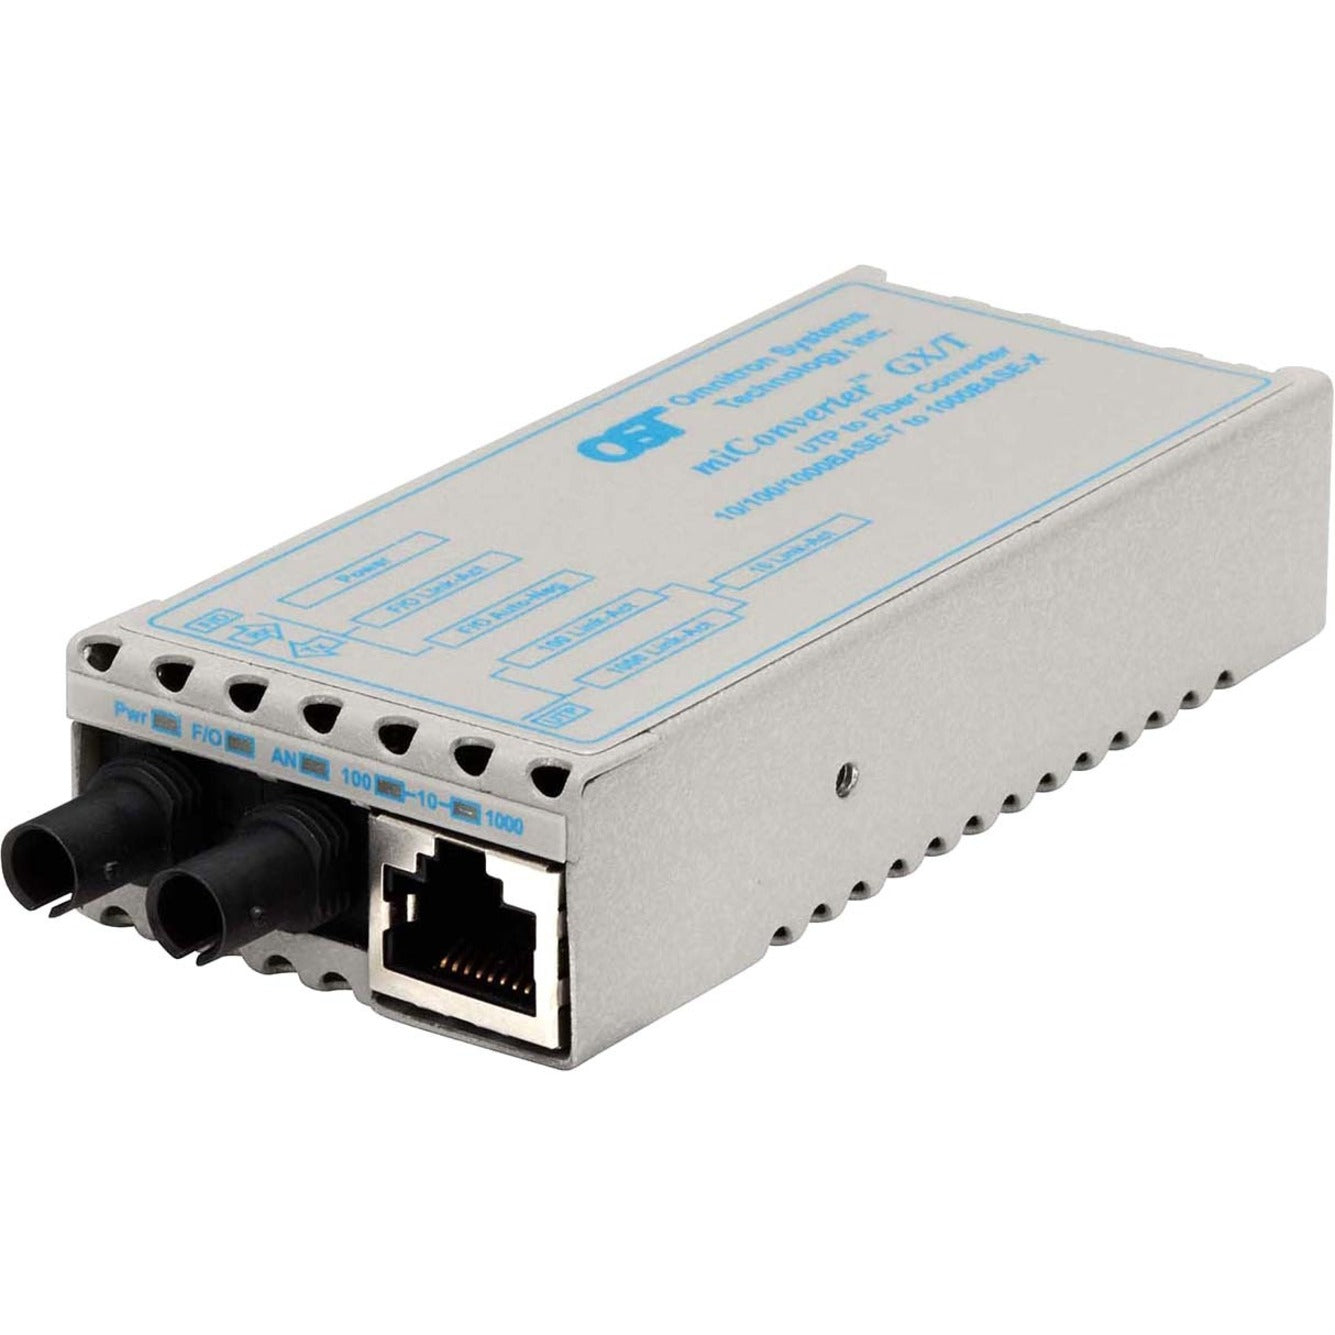 Omnitron Systems 1220-0-1 miConverter GX/T ST Multimode 550m US AC Powered, Transceiver/Media Converter